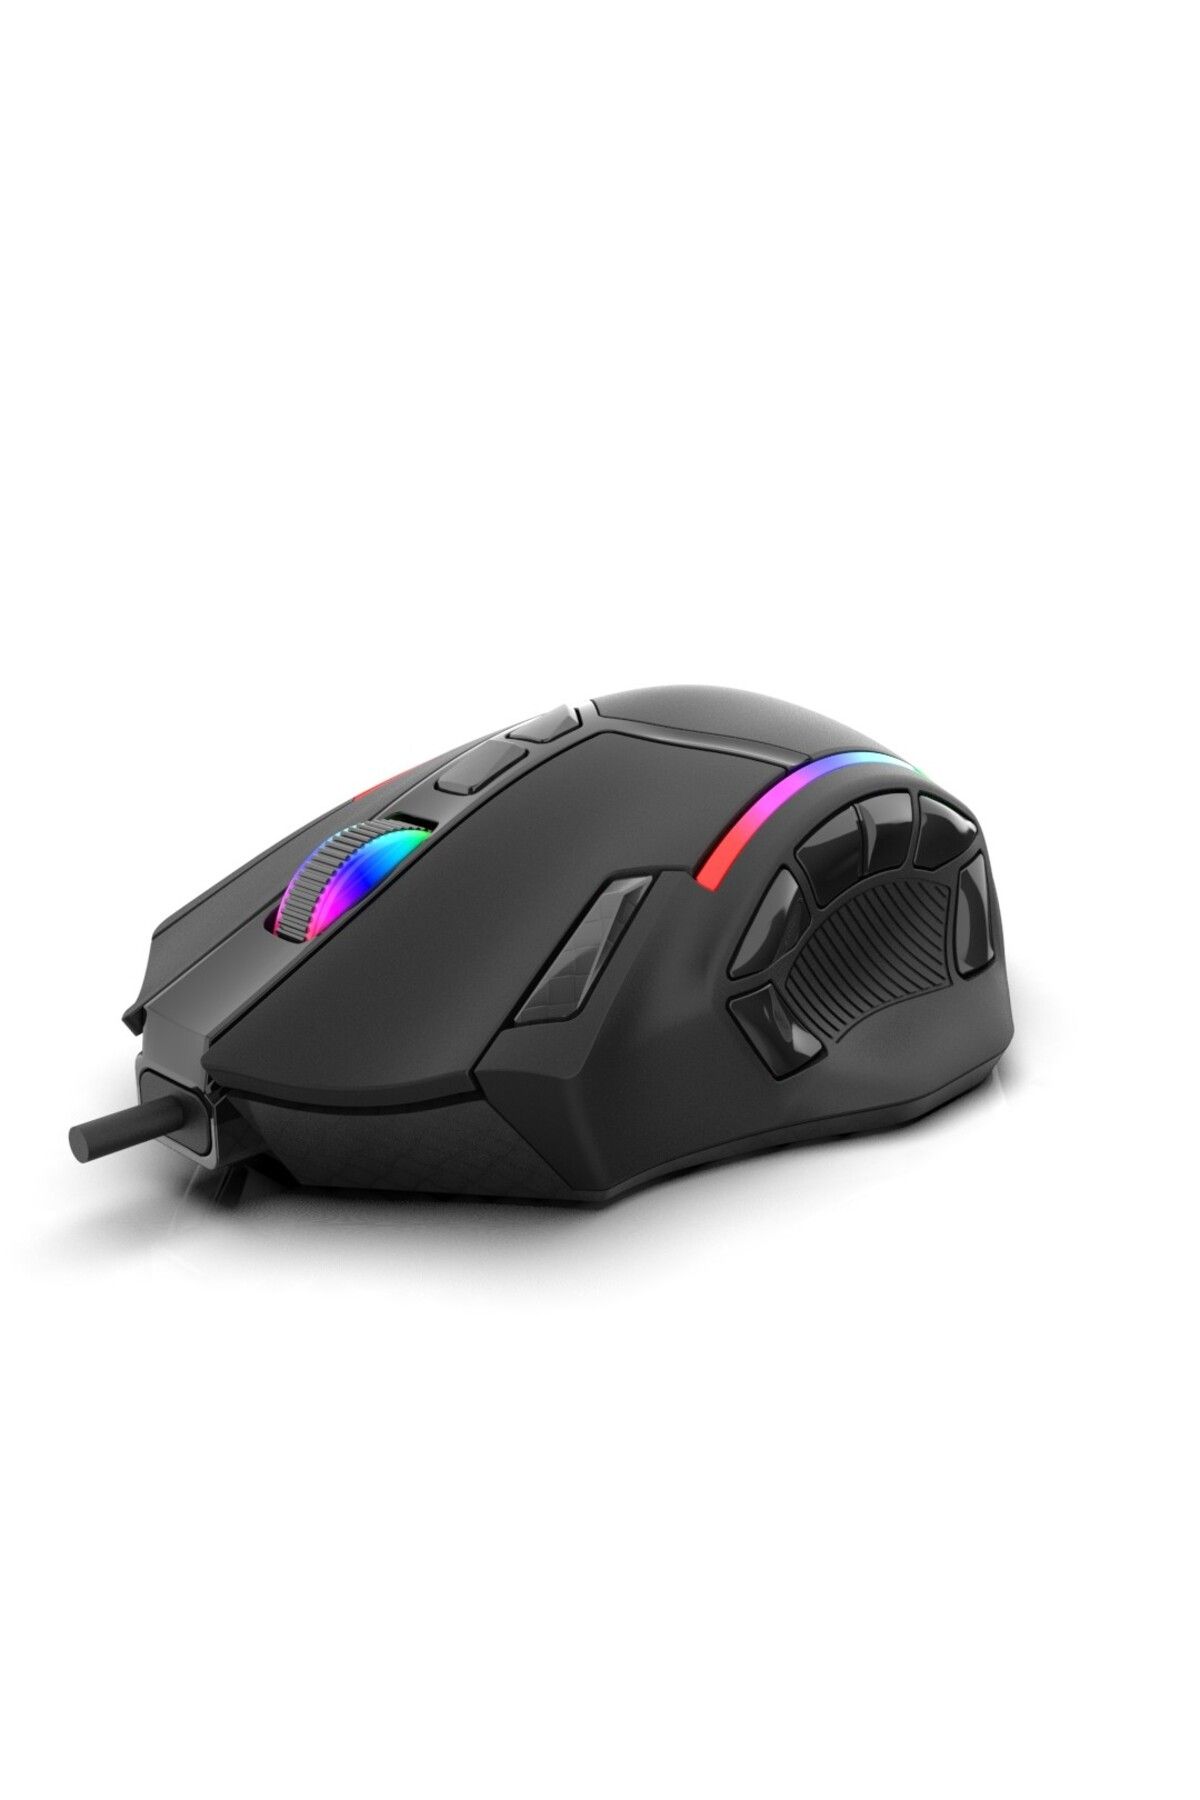 Inca IMG-351 Empousa  RGB Led 12800 Dpi 12 Keys Macro Programmable  Gaming Mouse